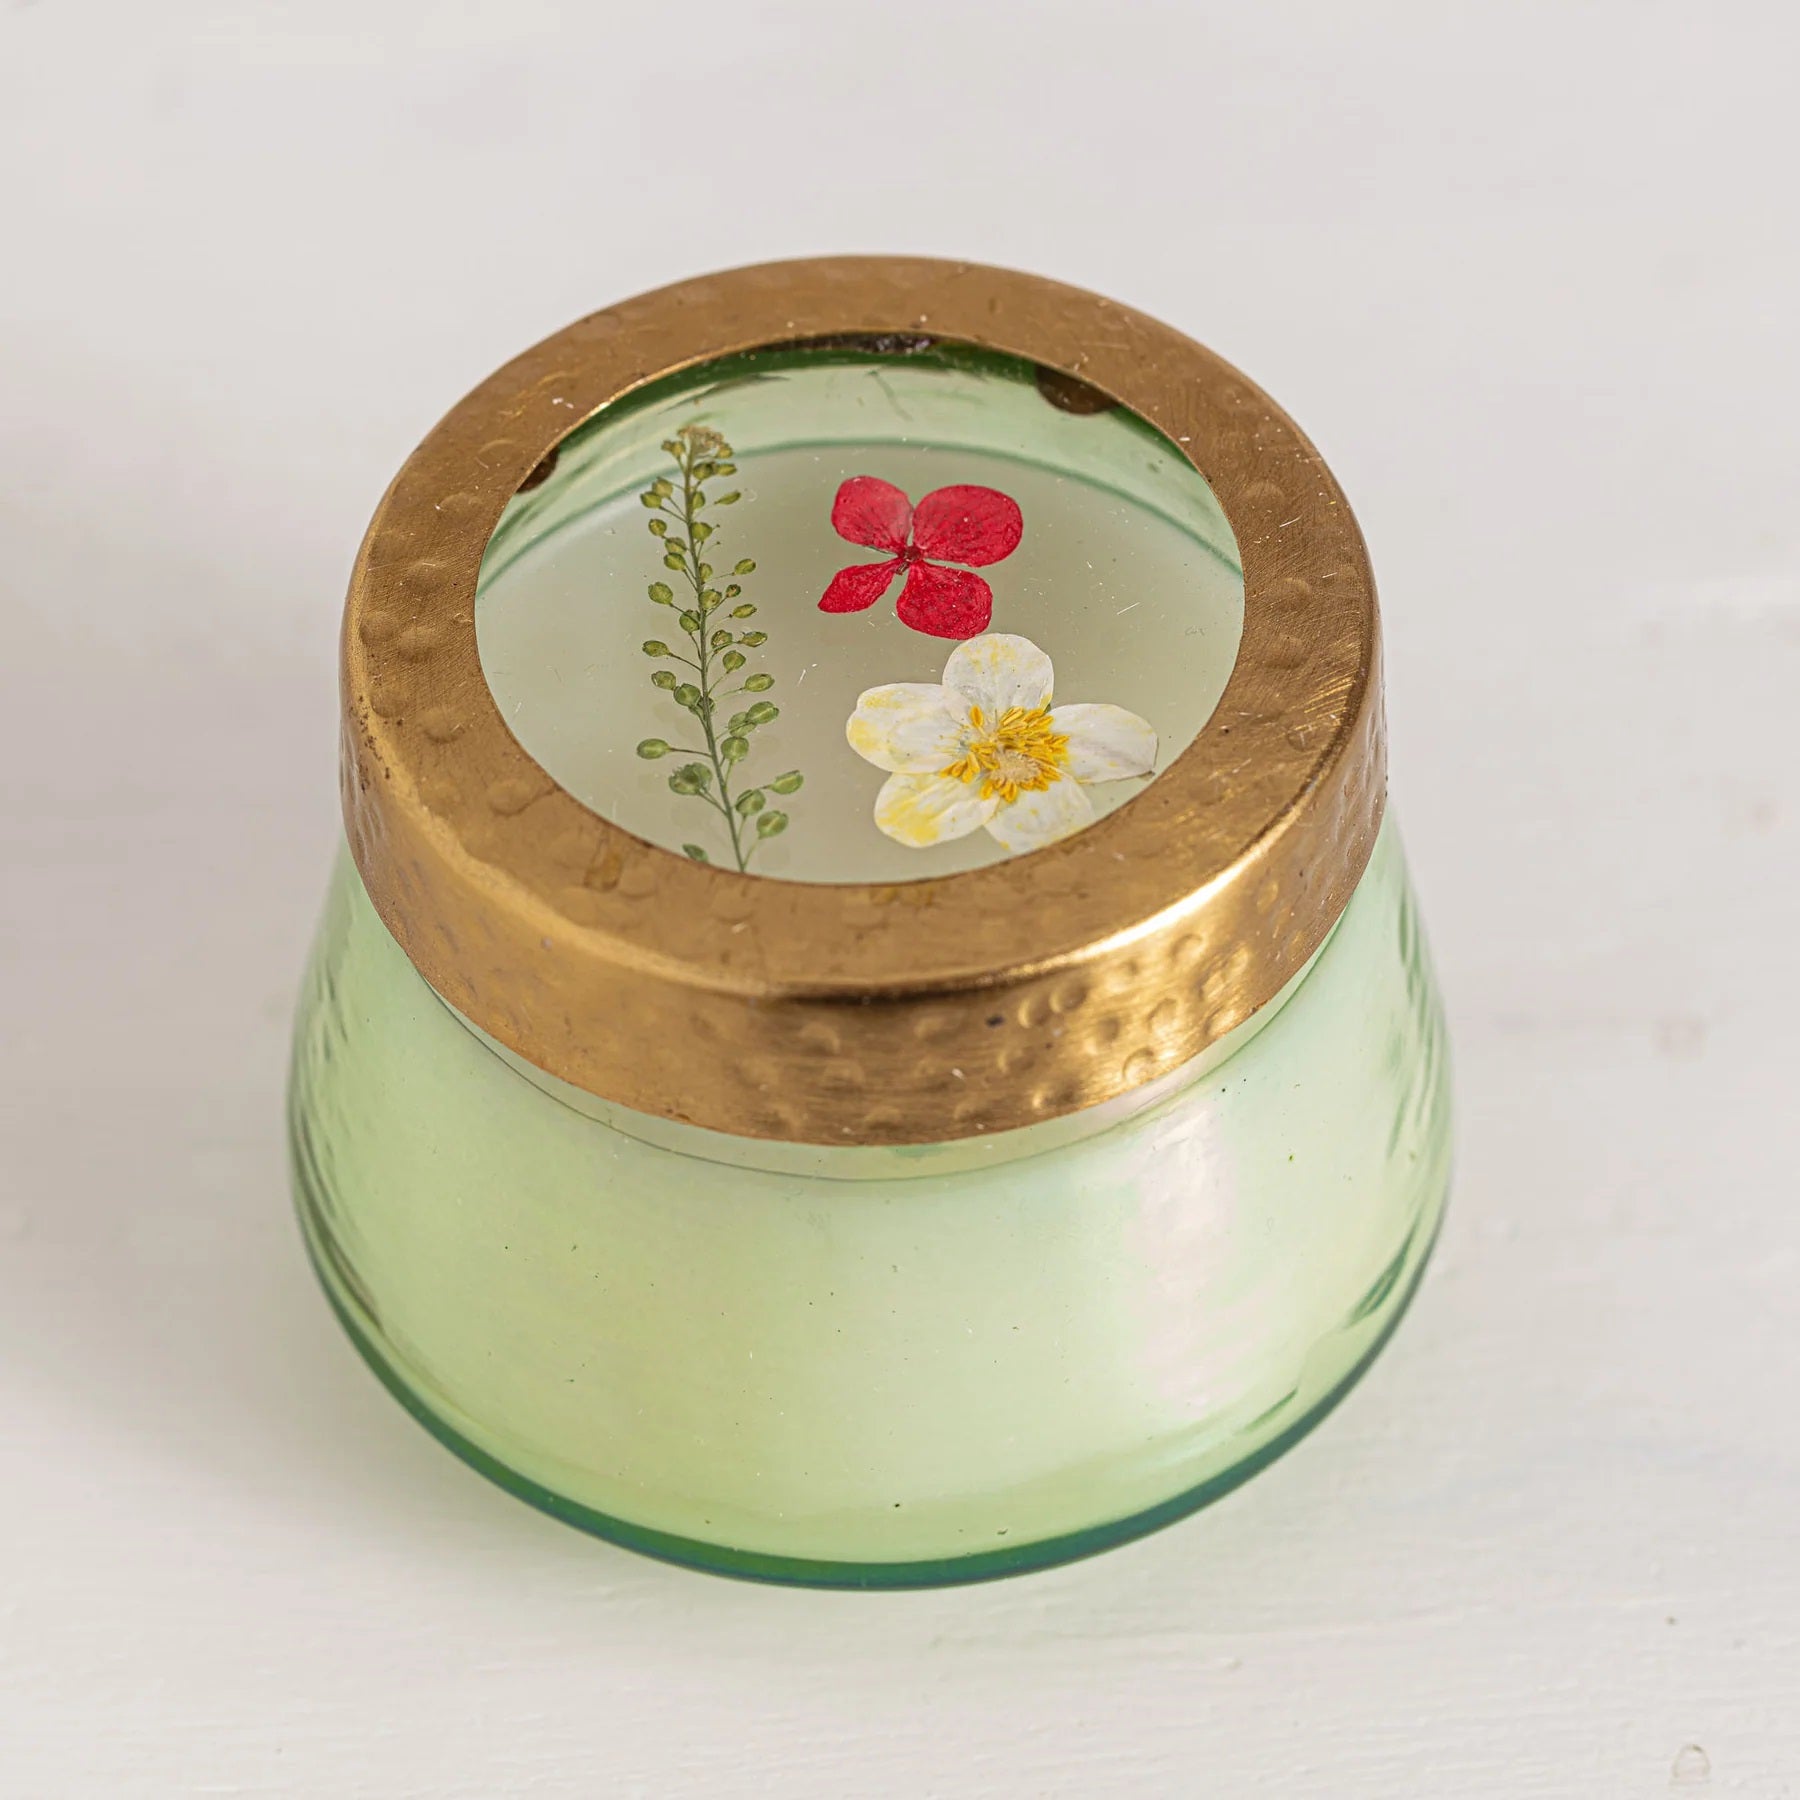 Rosy Rings, Small Tomato Vine Watercolor Pressed Floral Candle 4.5 oz - Boutique Dandelion